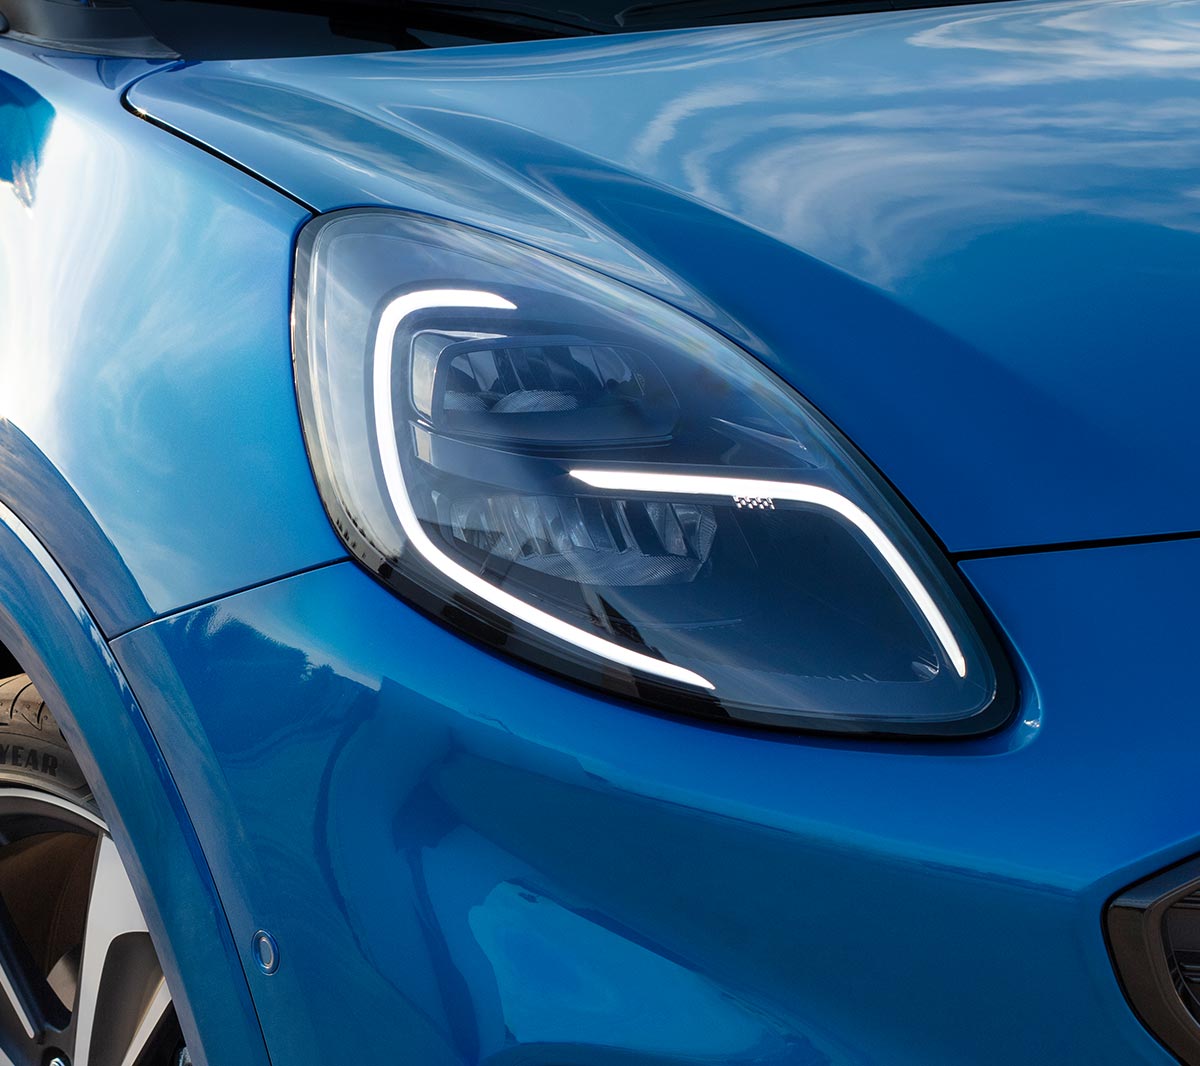 New blue Ford Puma close up on headlights